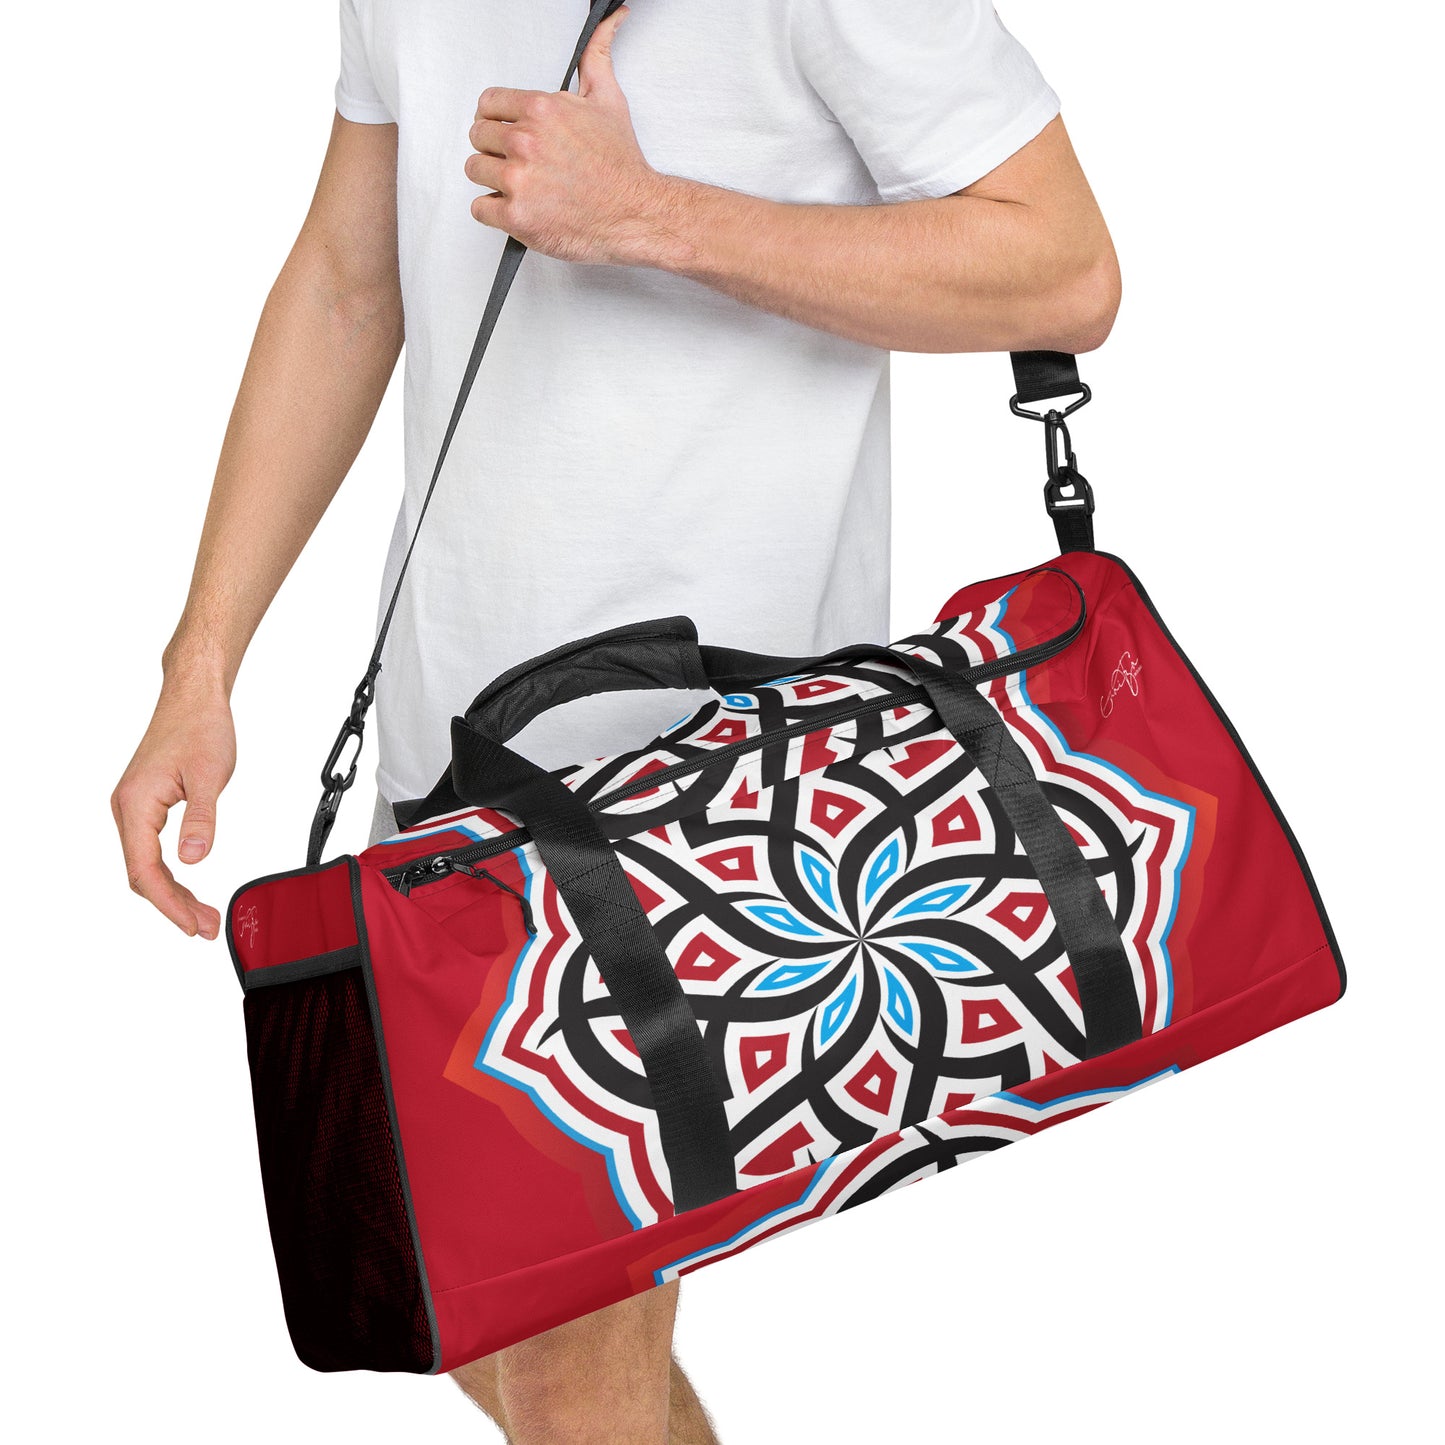 Arabian Summer Dream - Duffle bag by Craitza© Red Edition